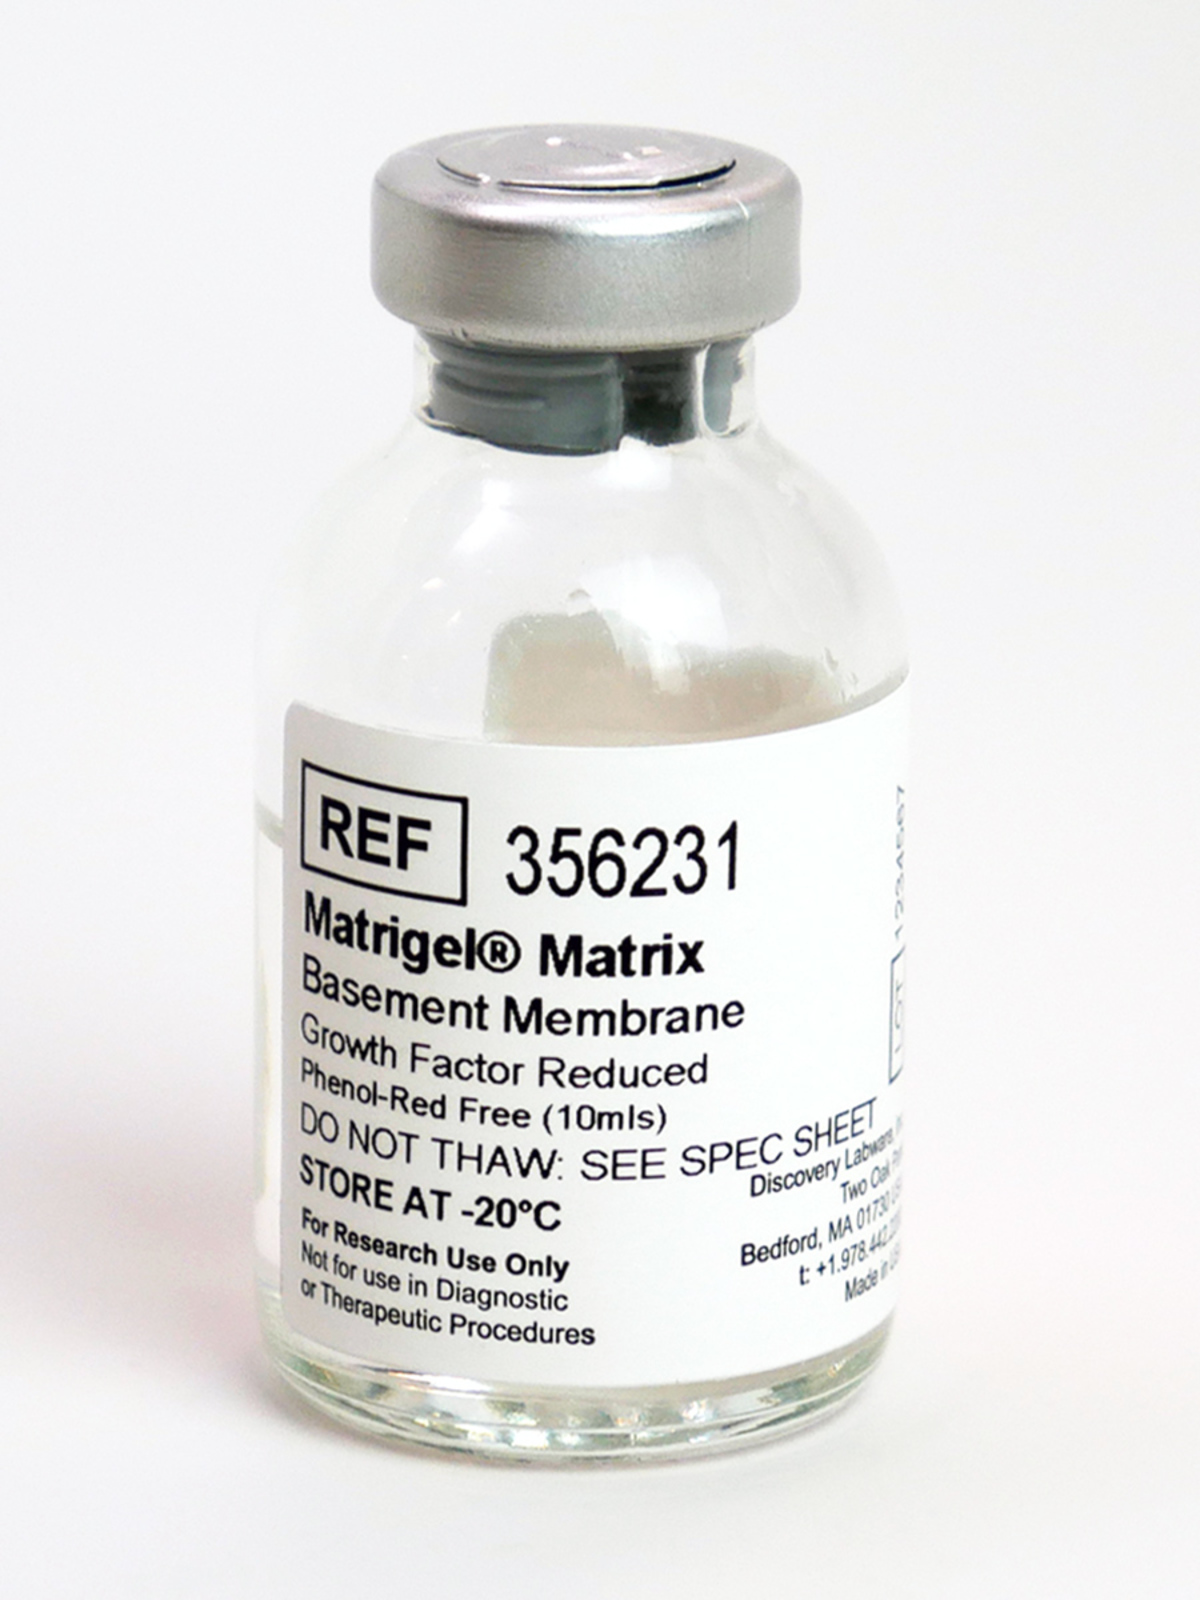 Corning® Matrigel® Growth Factor Reduced (GFR) Basement Membrane Matrix, Phenol Red-free, LDEV-free, 10 mL